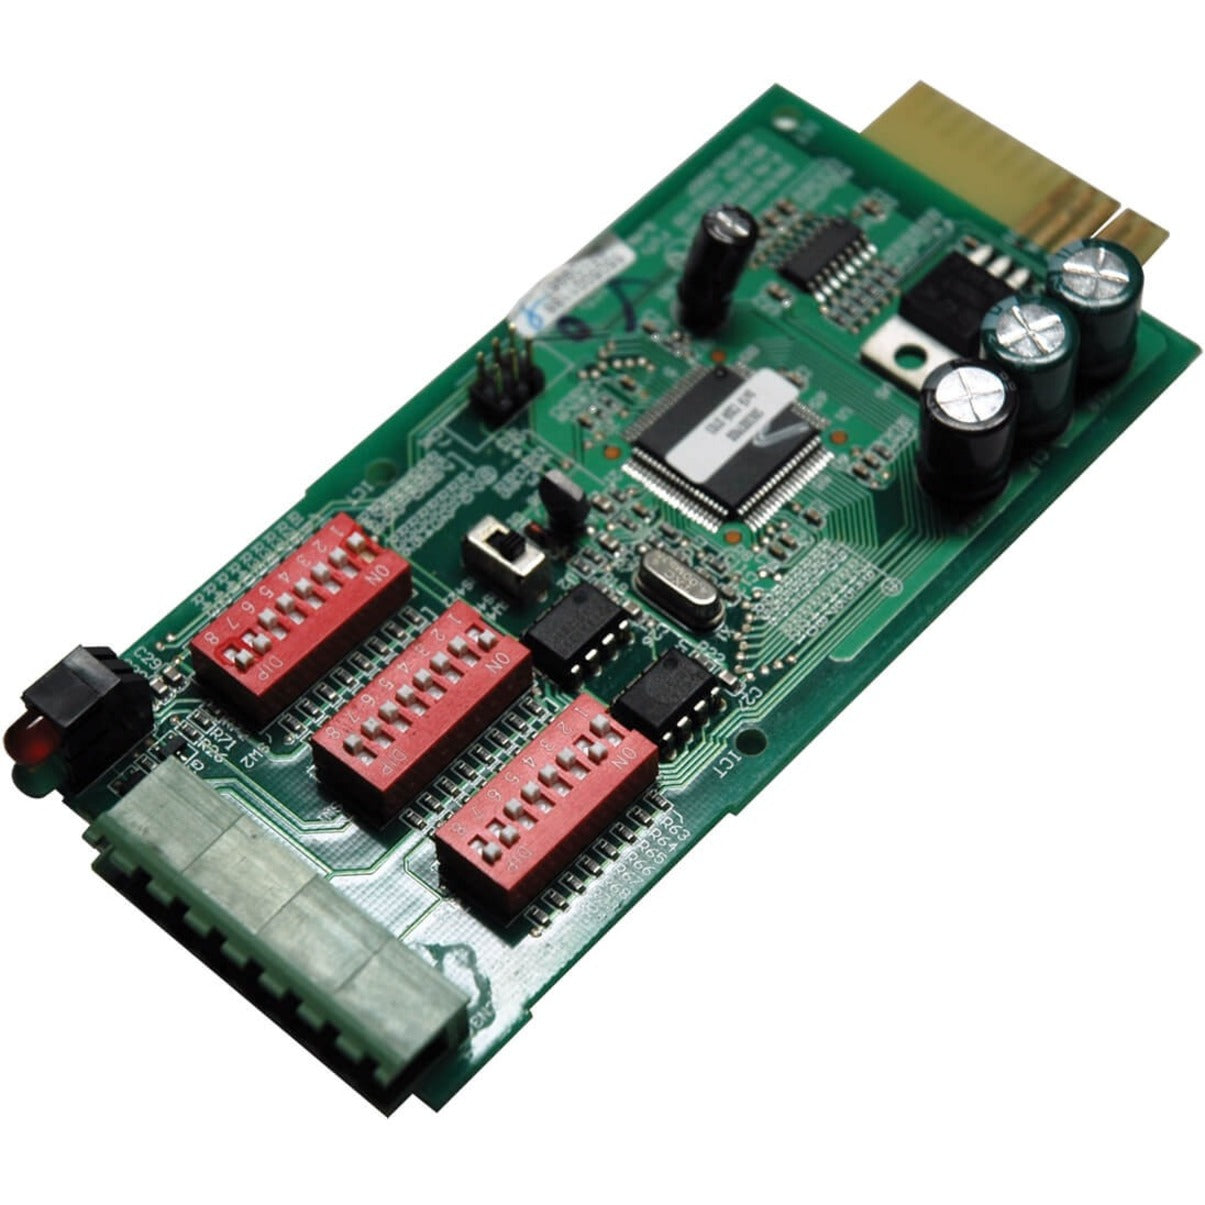 Tripp Lite MODBUSCARD Remote Power Management Adapter, 2 Year Limited Warranty, Modbus RTU Protocol, Monitoring & Control